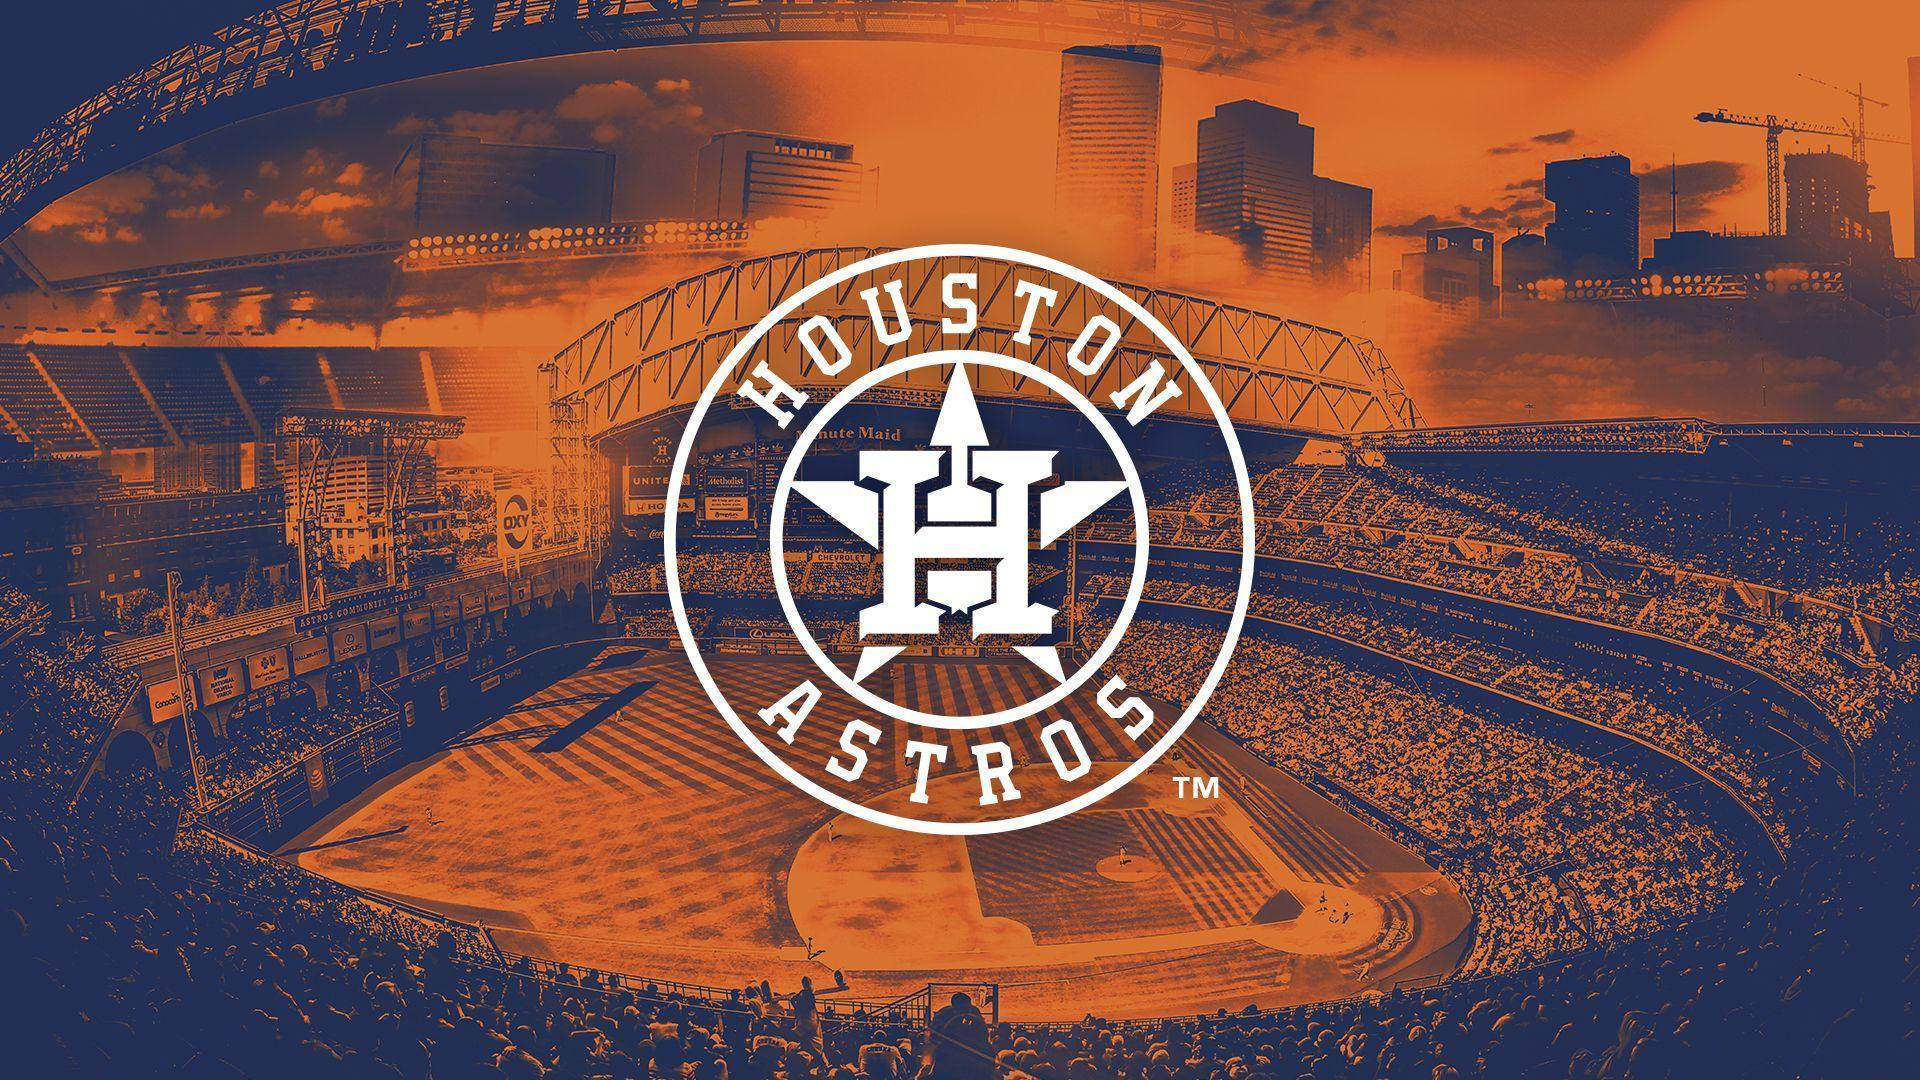 Houston Astros Monochrome Stadium Background